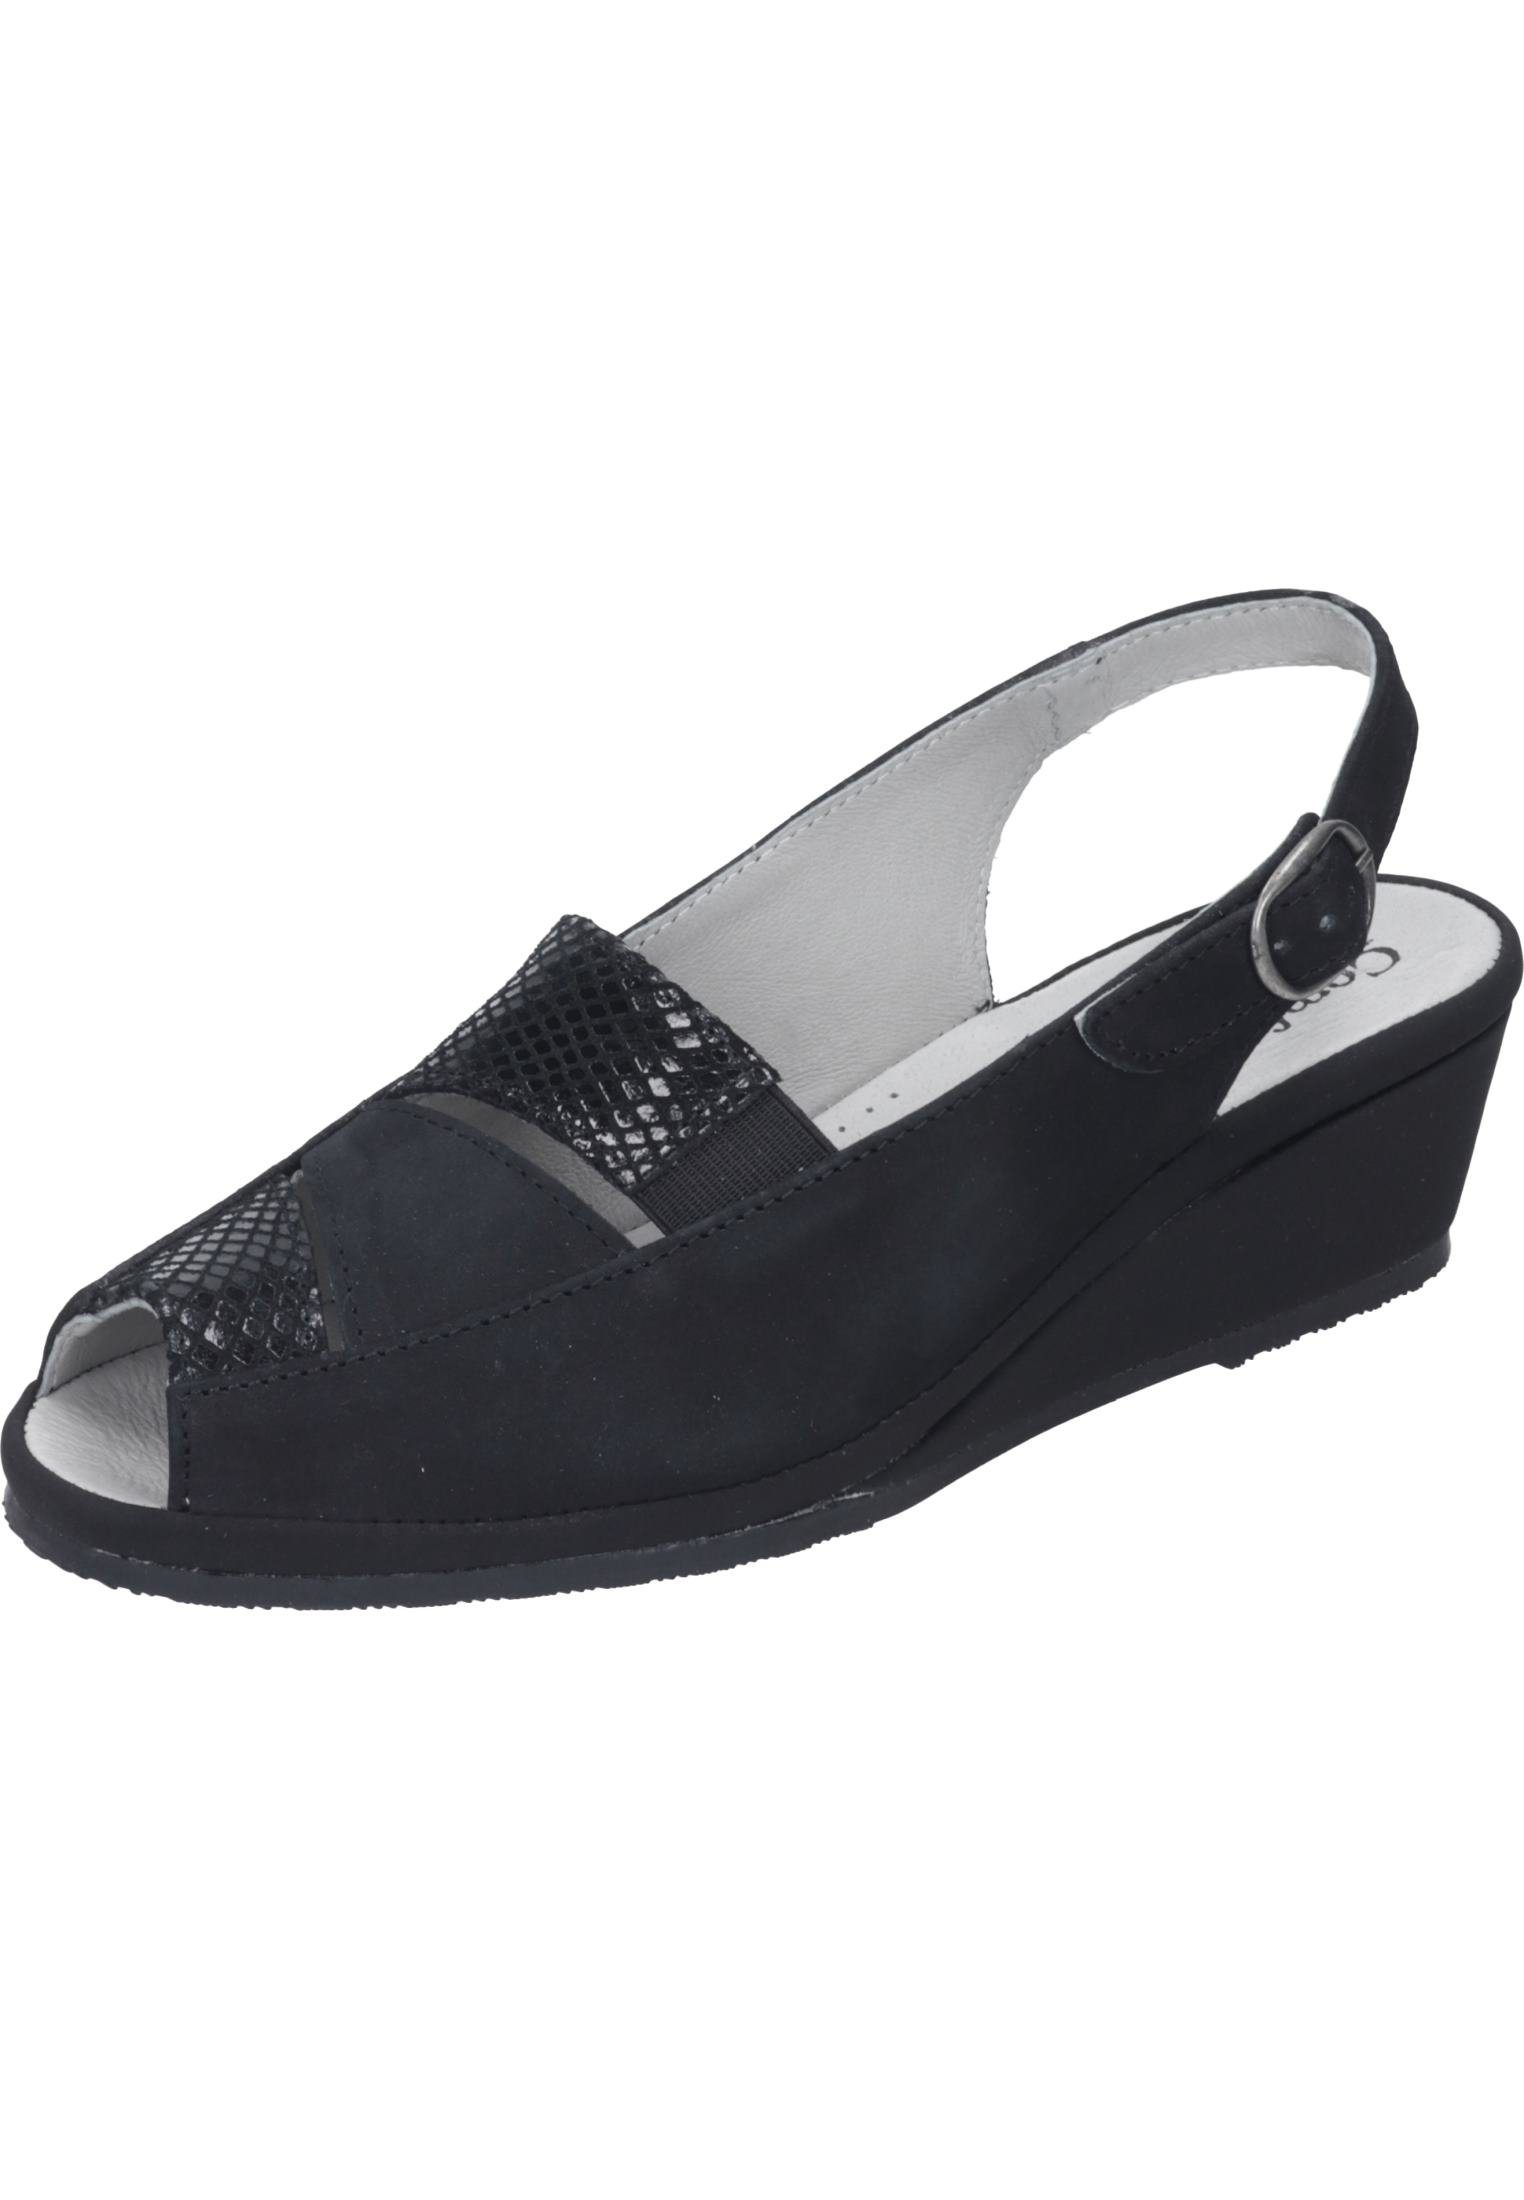 Gummizug Comfortabel Sandale Sandalen mit schwarz